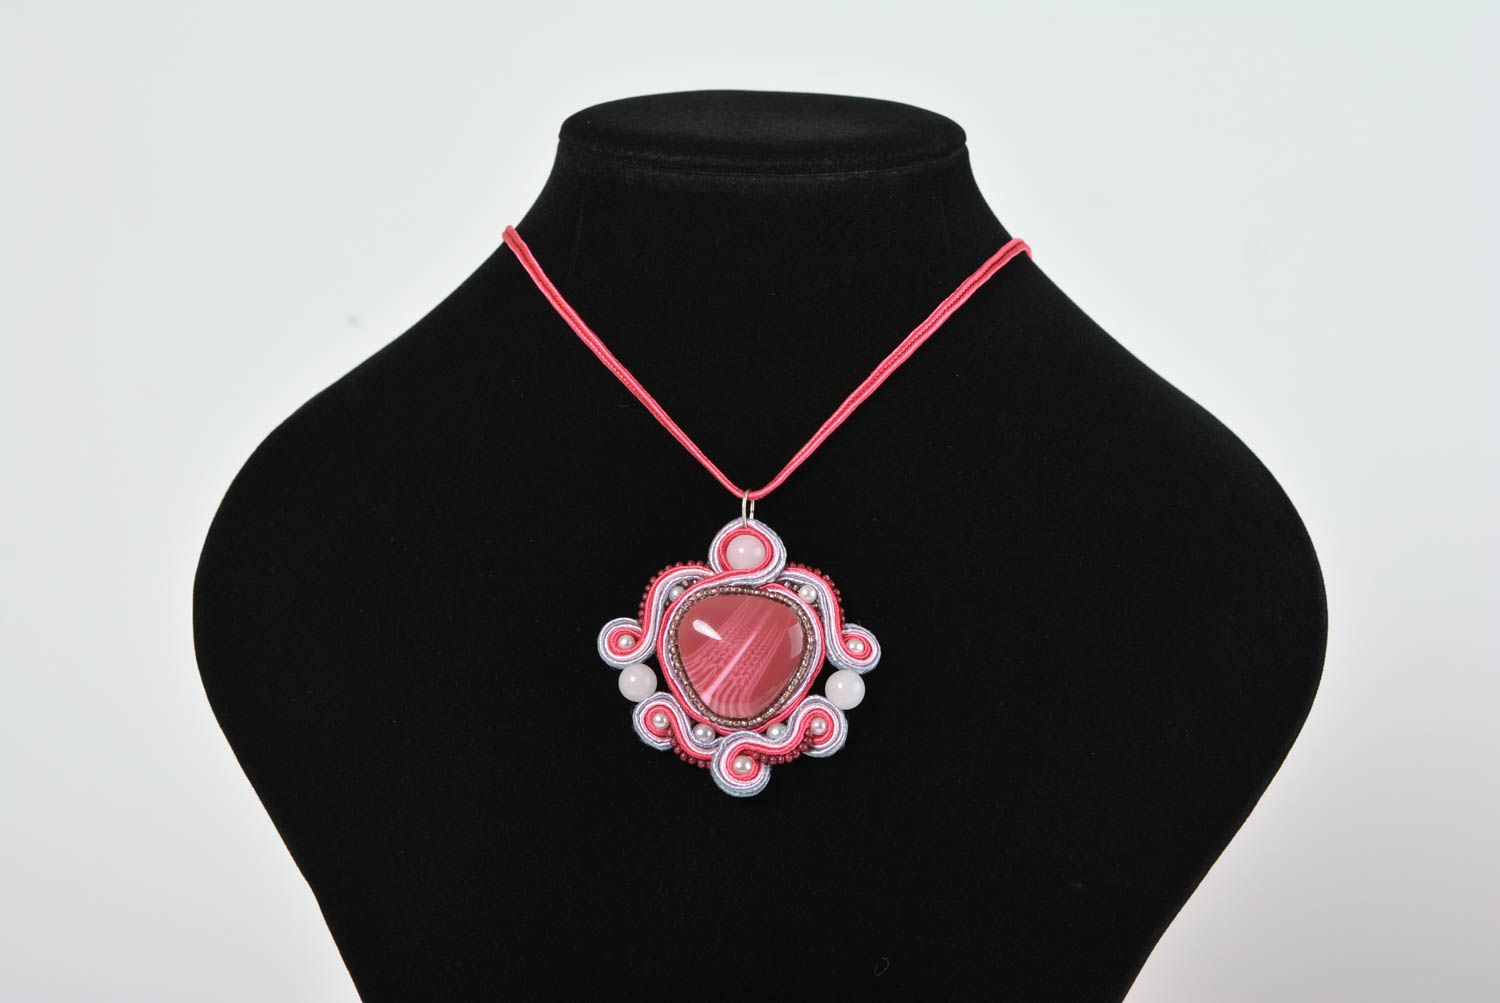 Handmade necklace soutache pendant soutache jewelry with natural stones photo 1